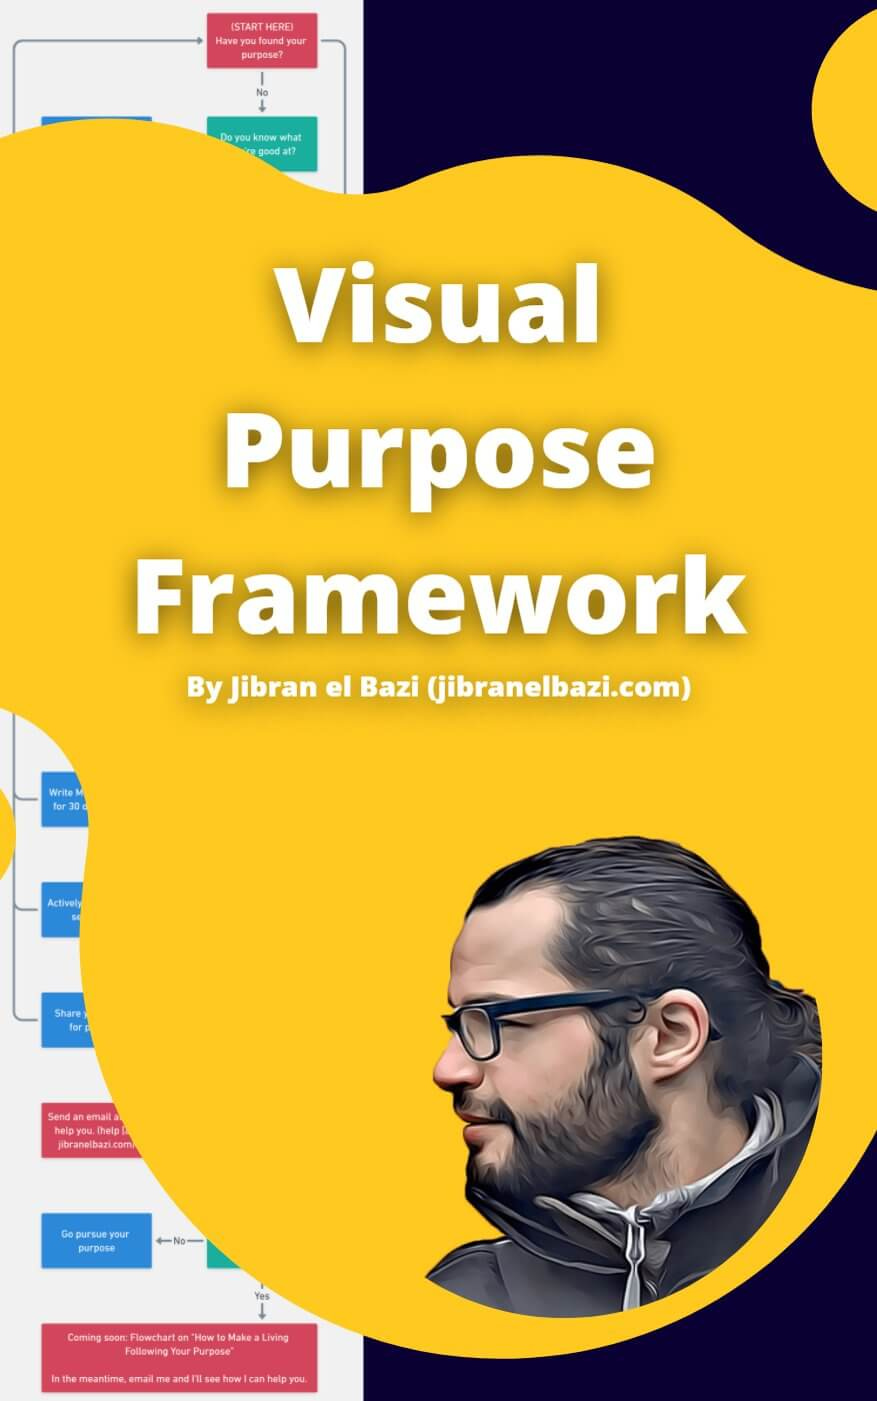 freebie teaser image for visual purpose framework